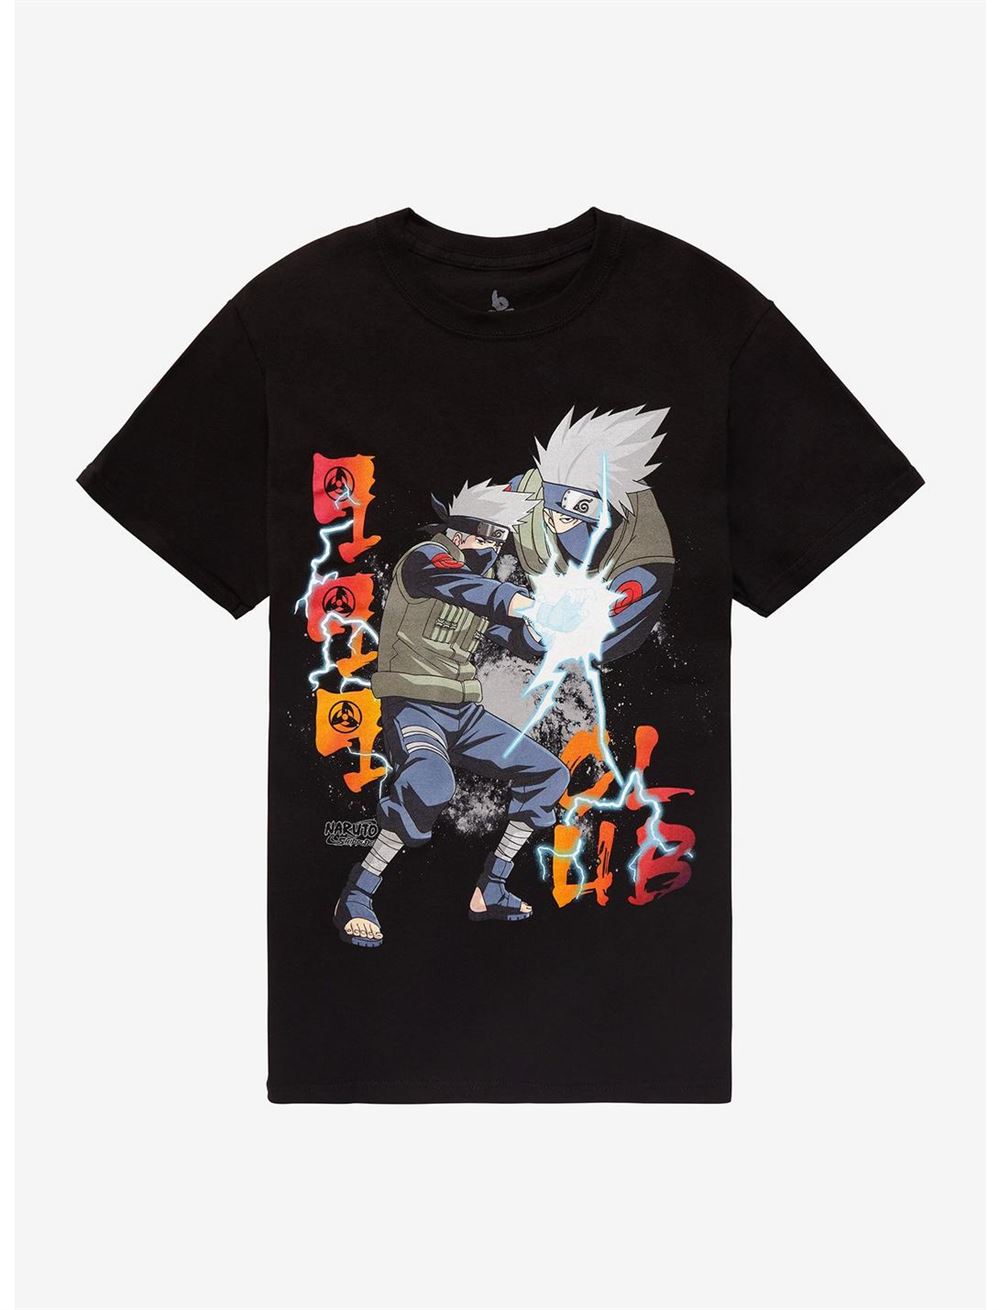 999 By Juice Wrld X Naruto Kakashi T-shirt Hot Topic Exclusive